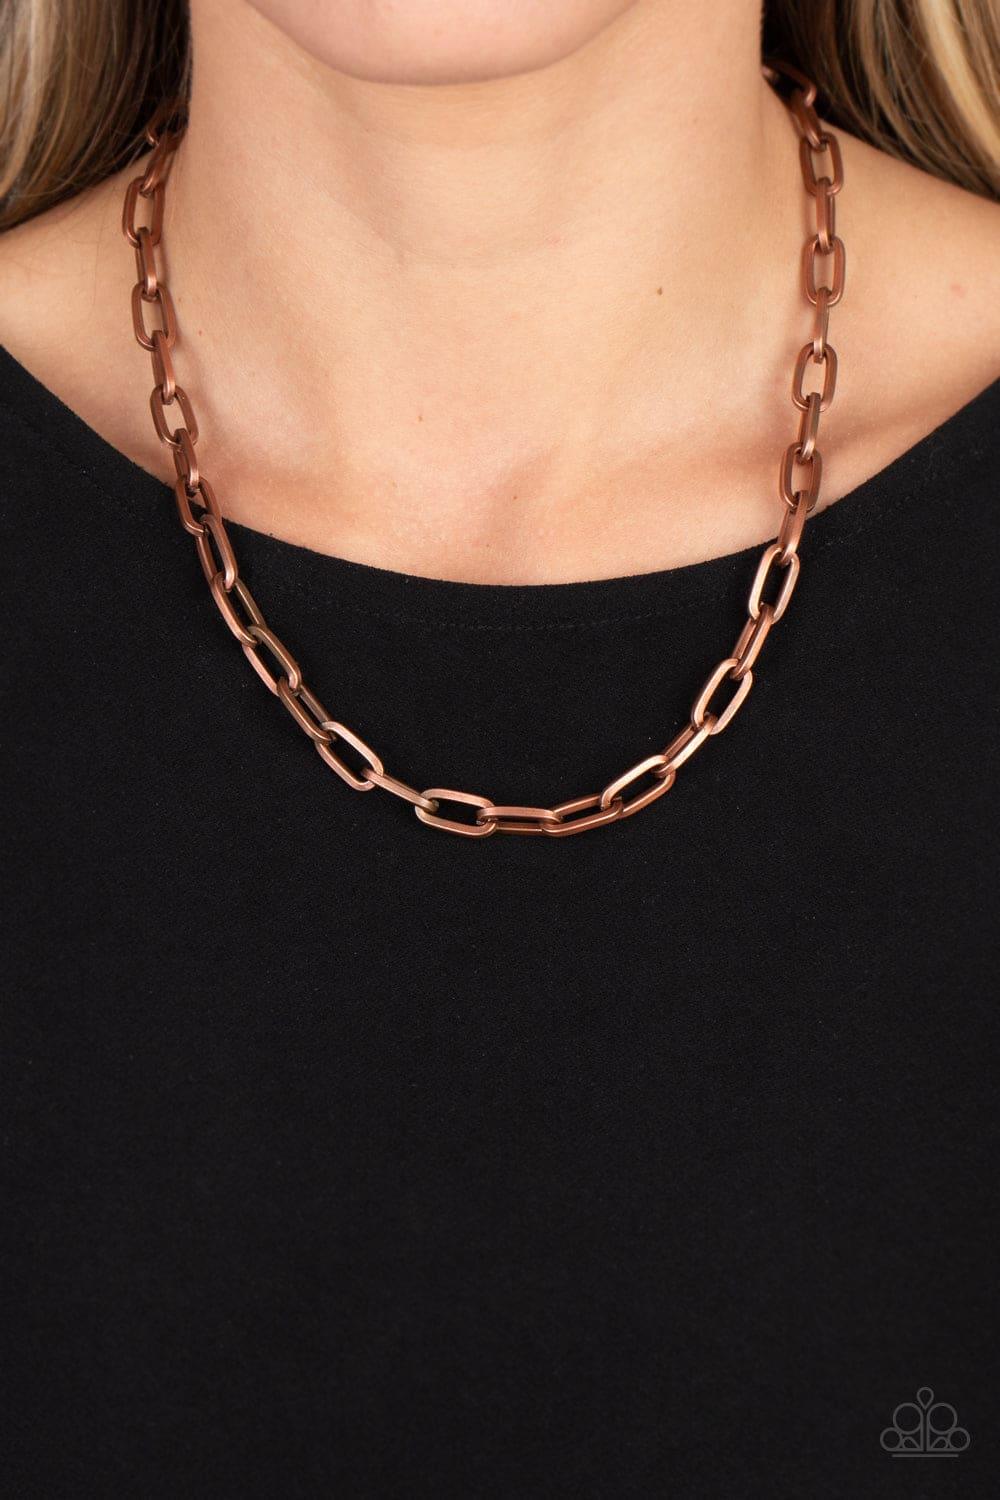 Paparazzi Accessories - Boston Backdrop - Copper Necklace - Bling by JessieK